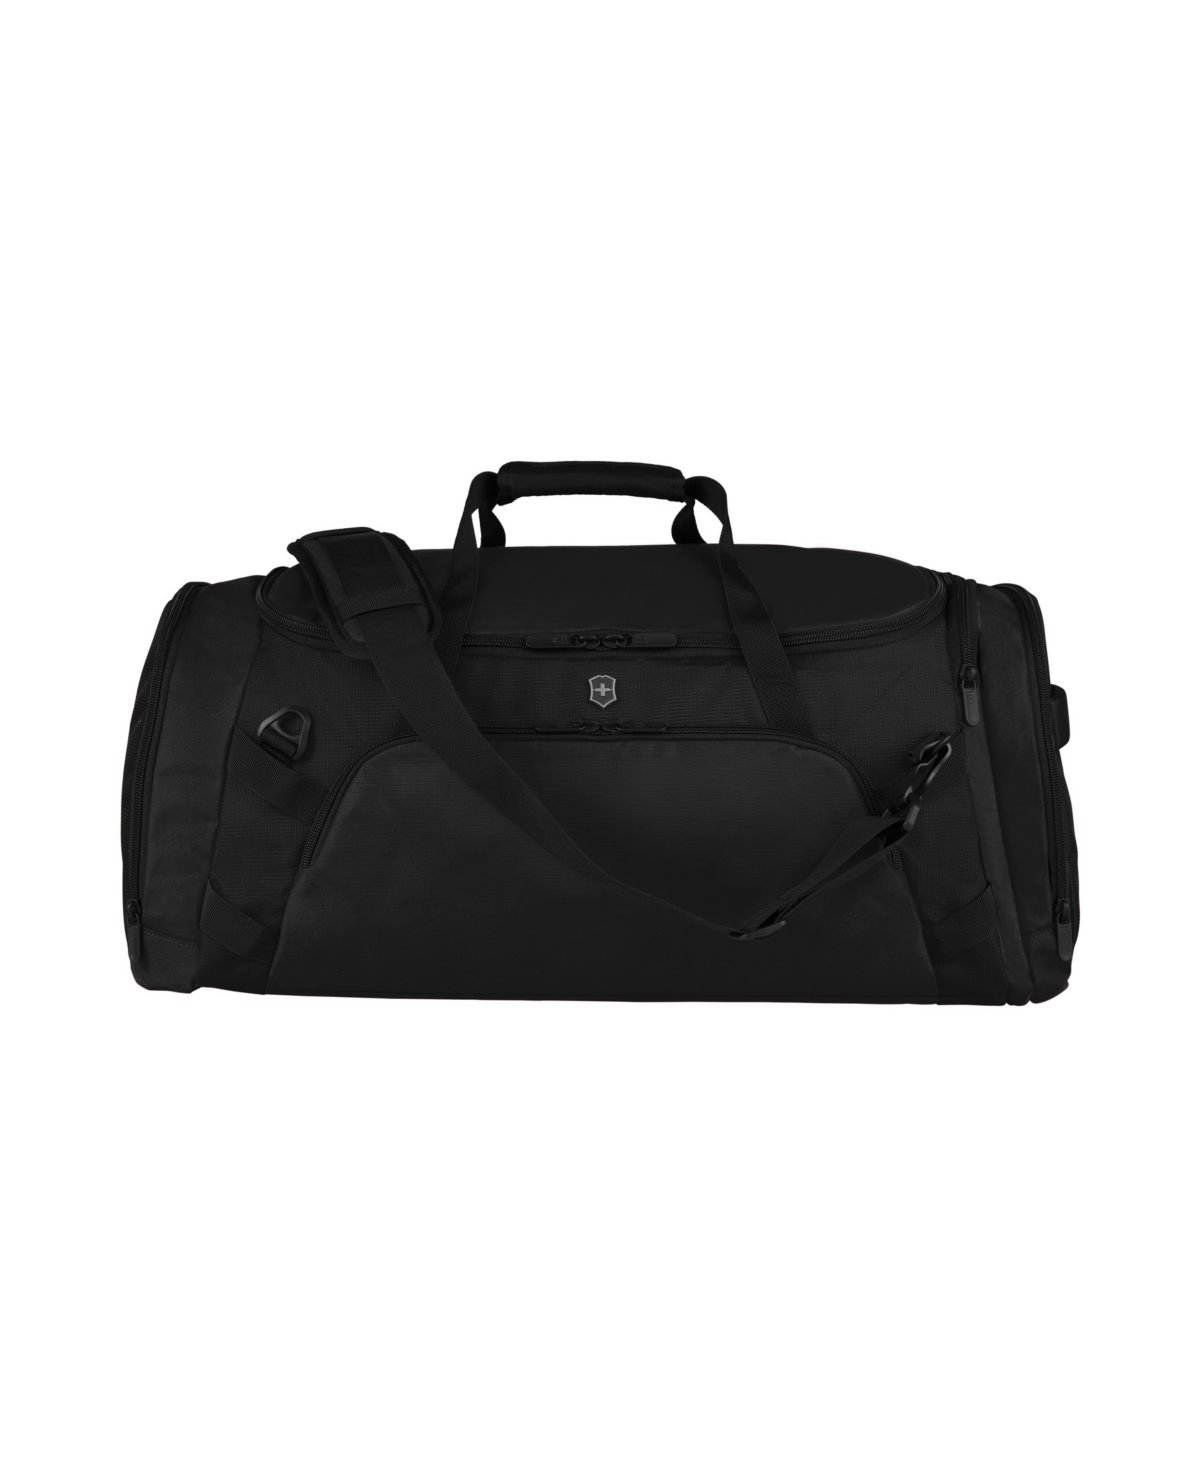 Vx Sport Evo 2-in-1 Backpack Duffel - Black